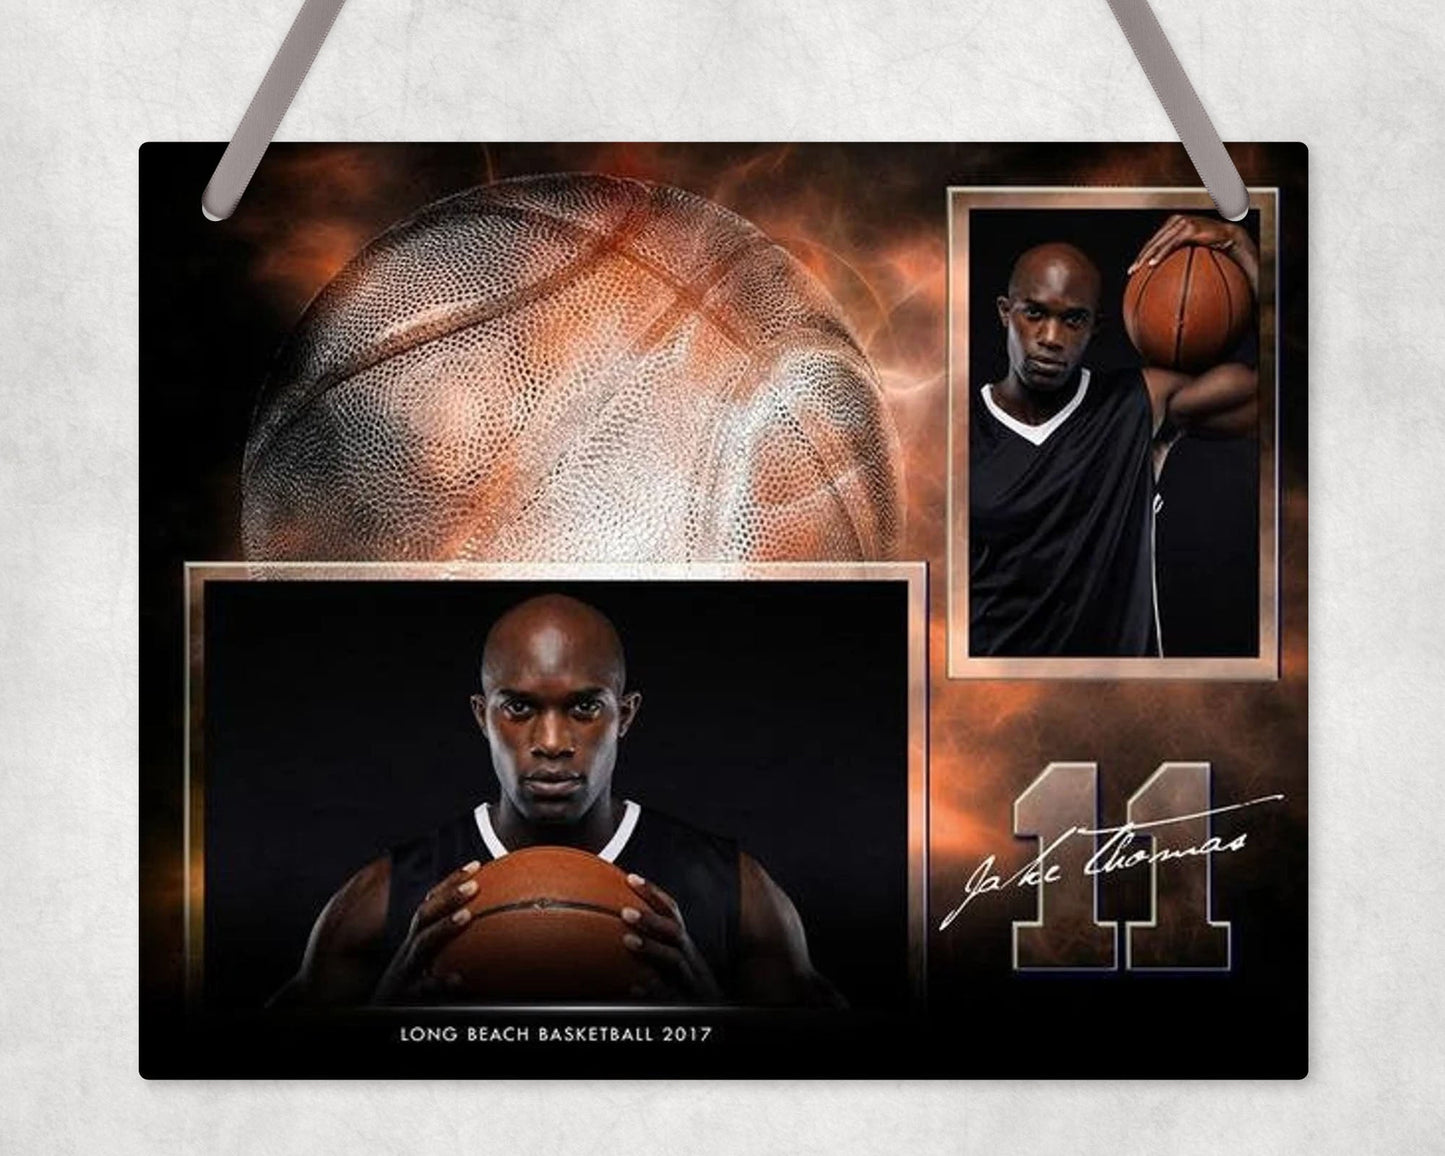 Basketball Team And Player Wall Sign Hanging